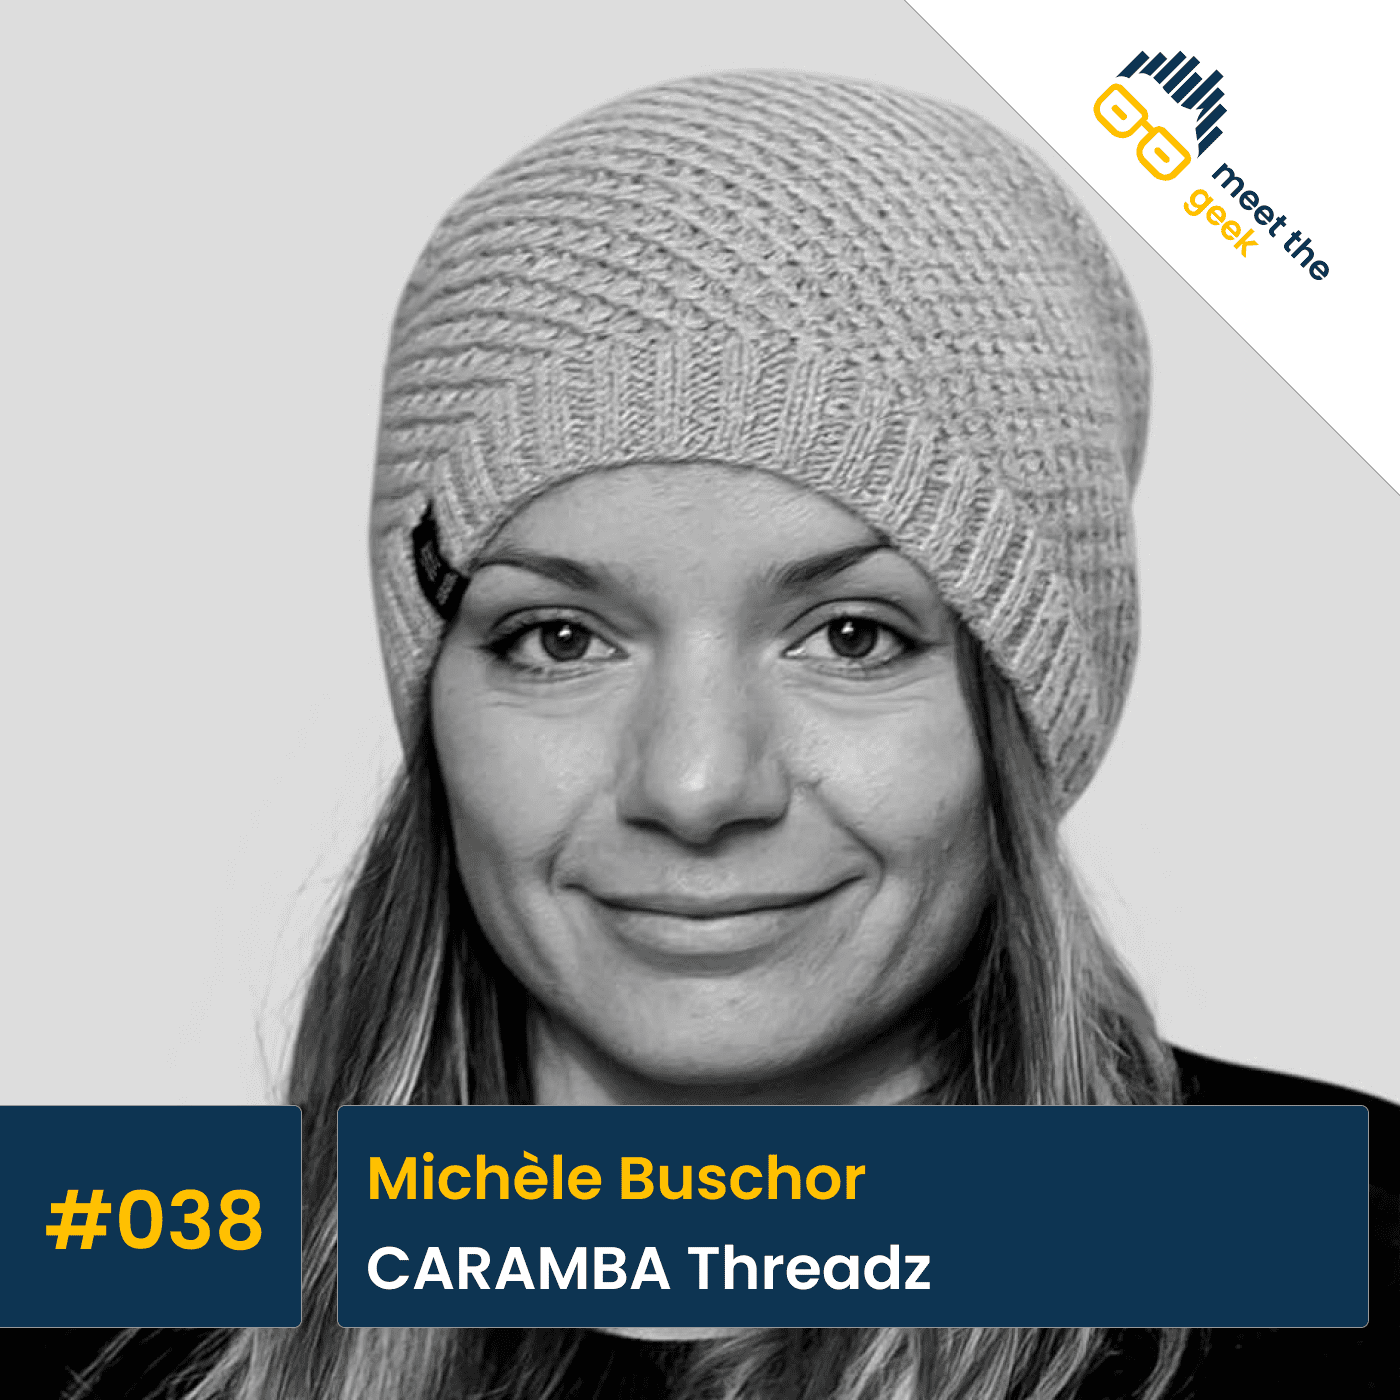 #038 Michèle Buschor, CARAMBA